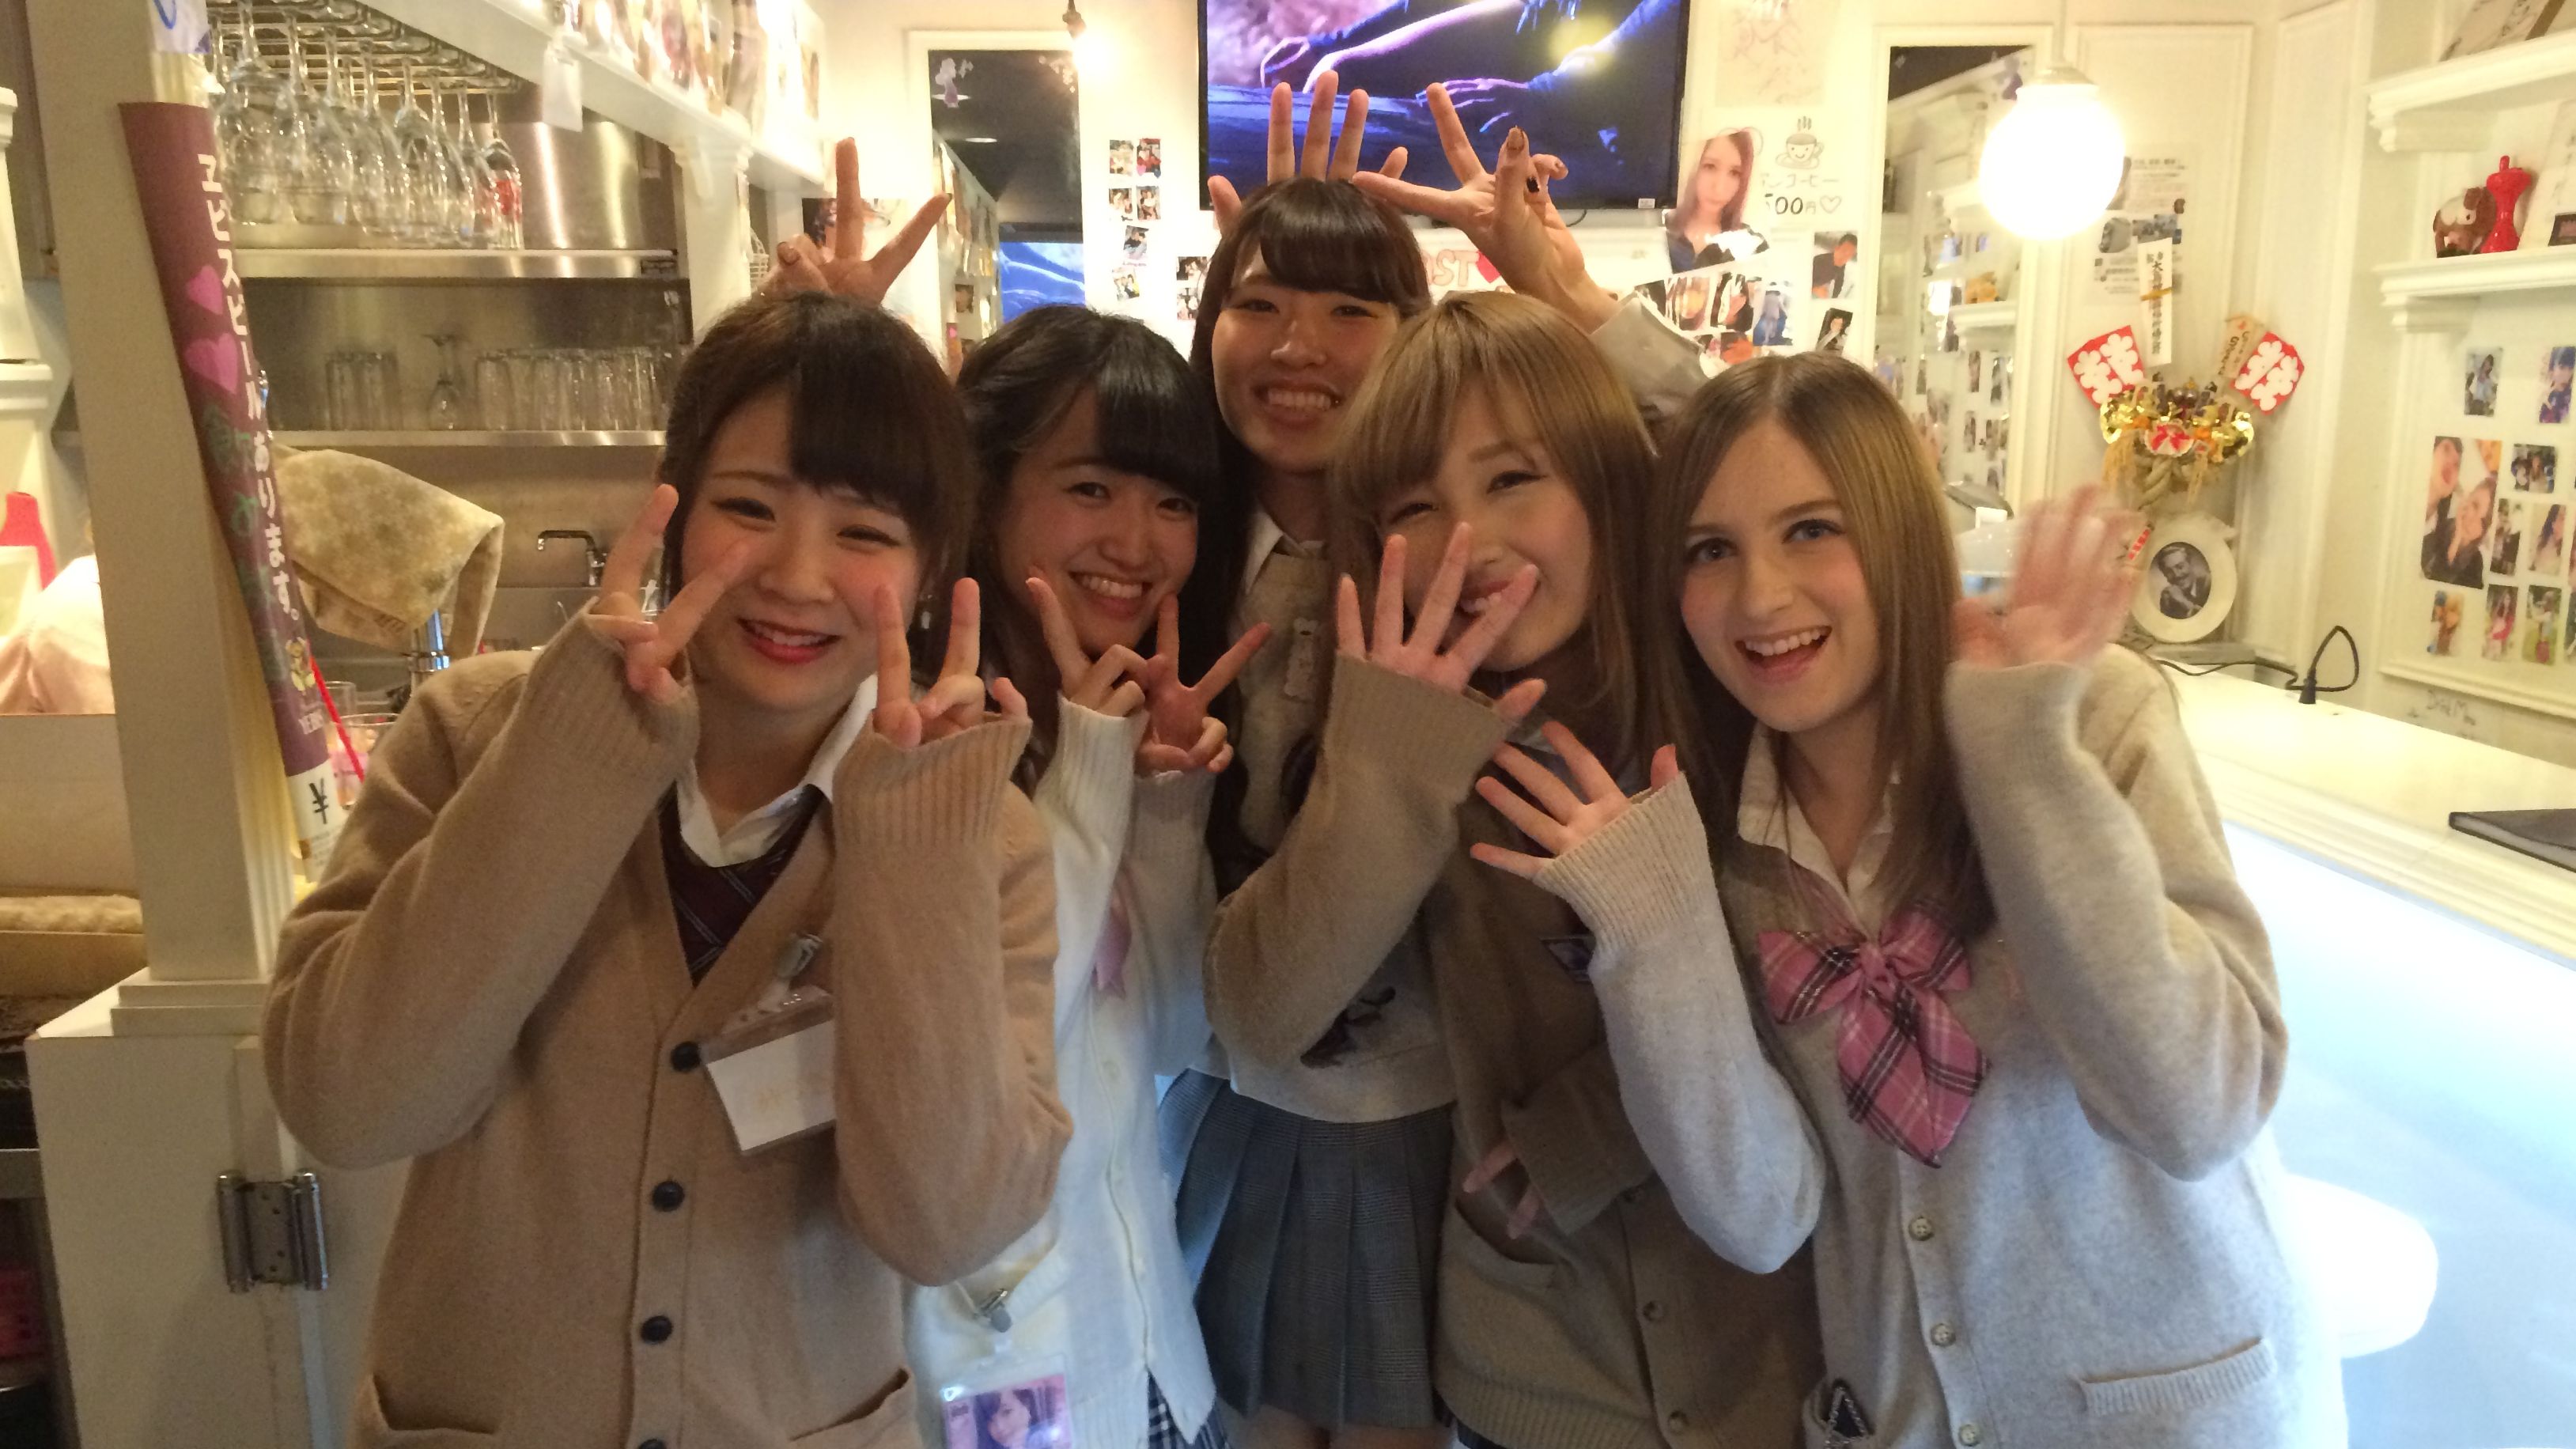 Innocent Teen Vids - Japan school girl culture: The dark truth | CNN